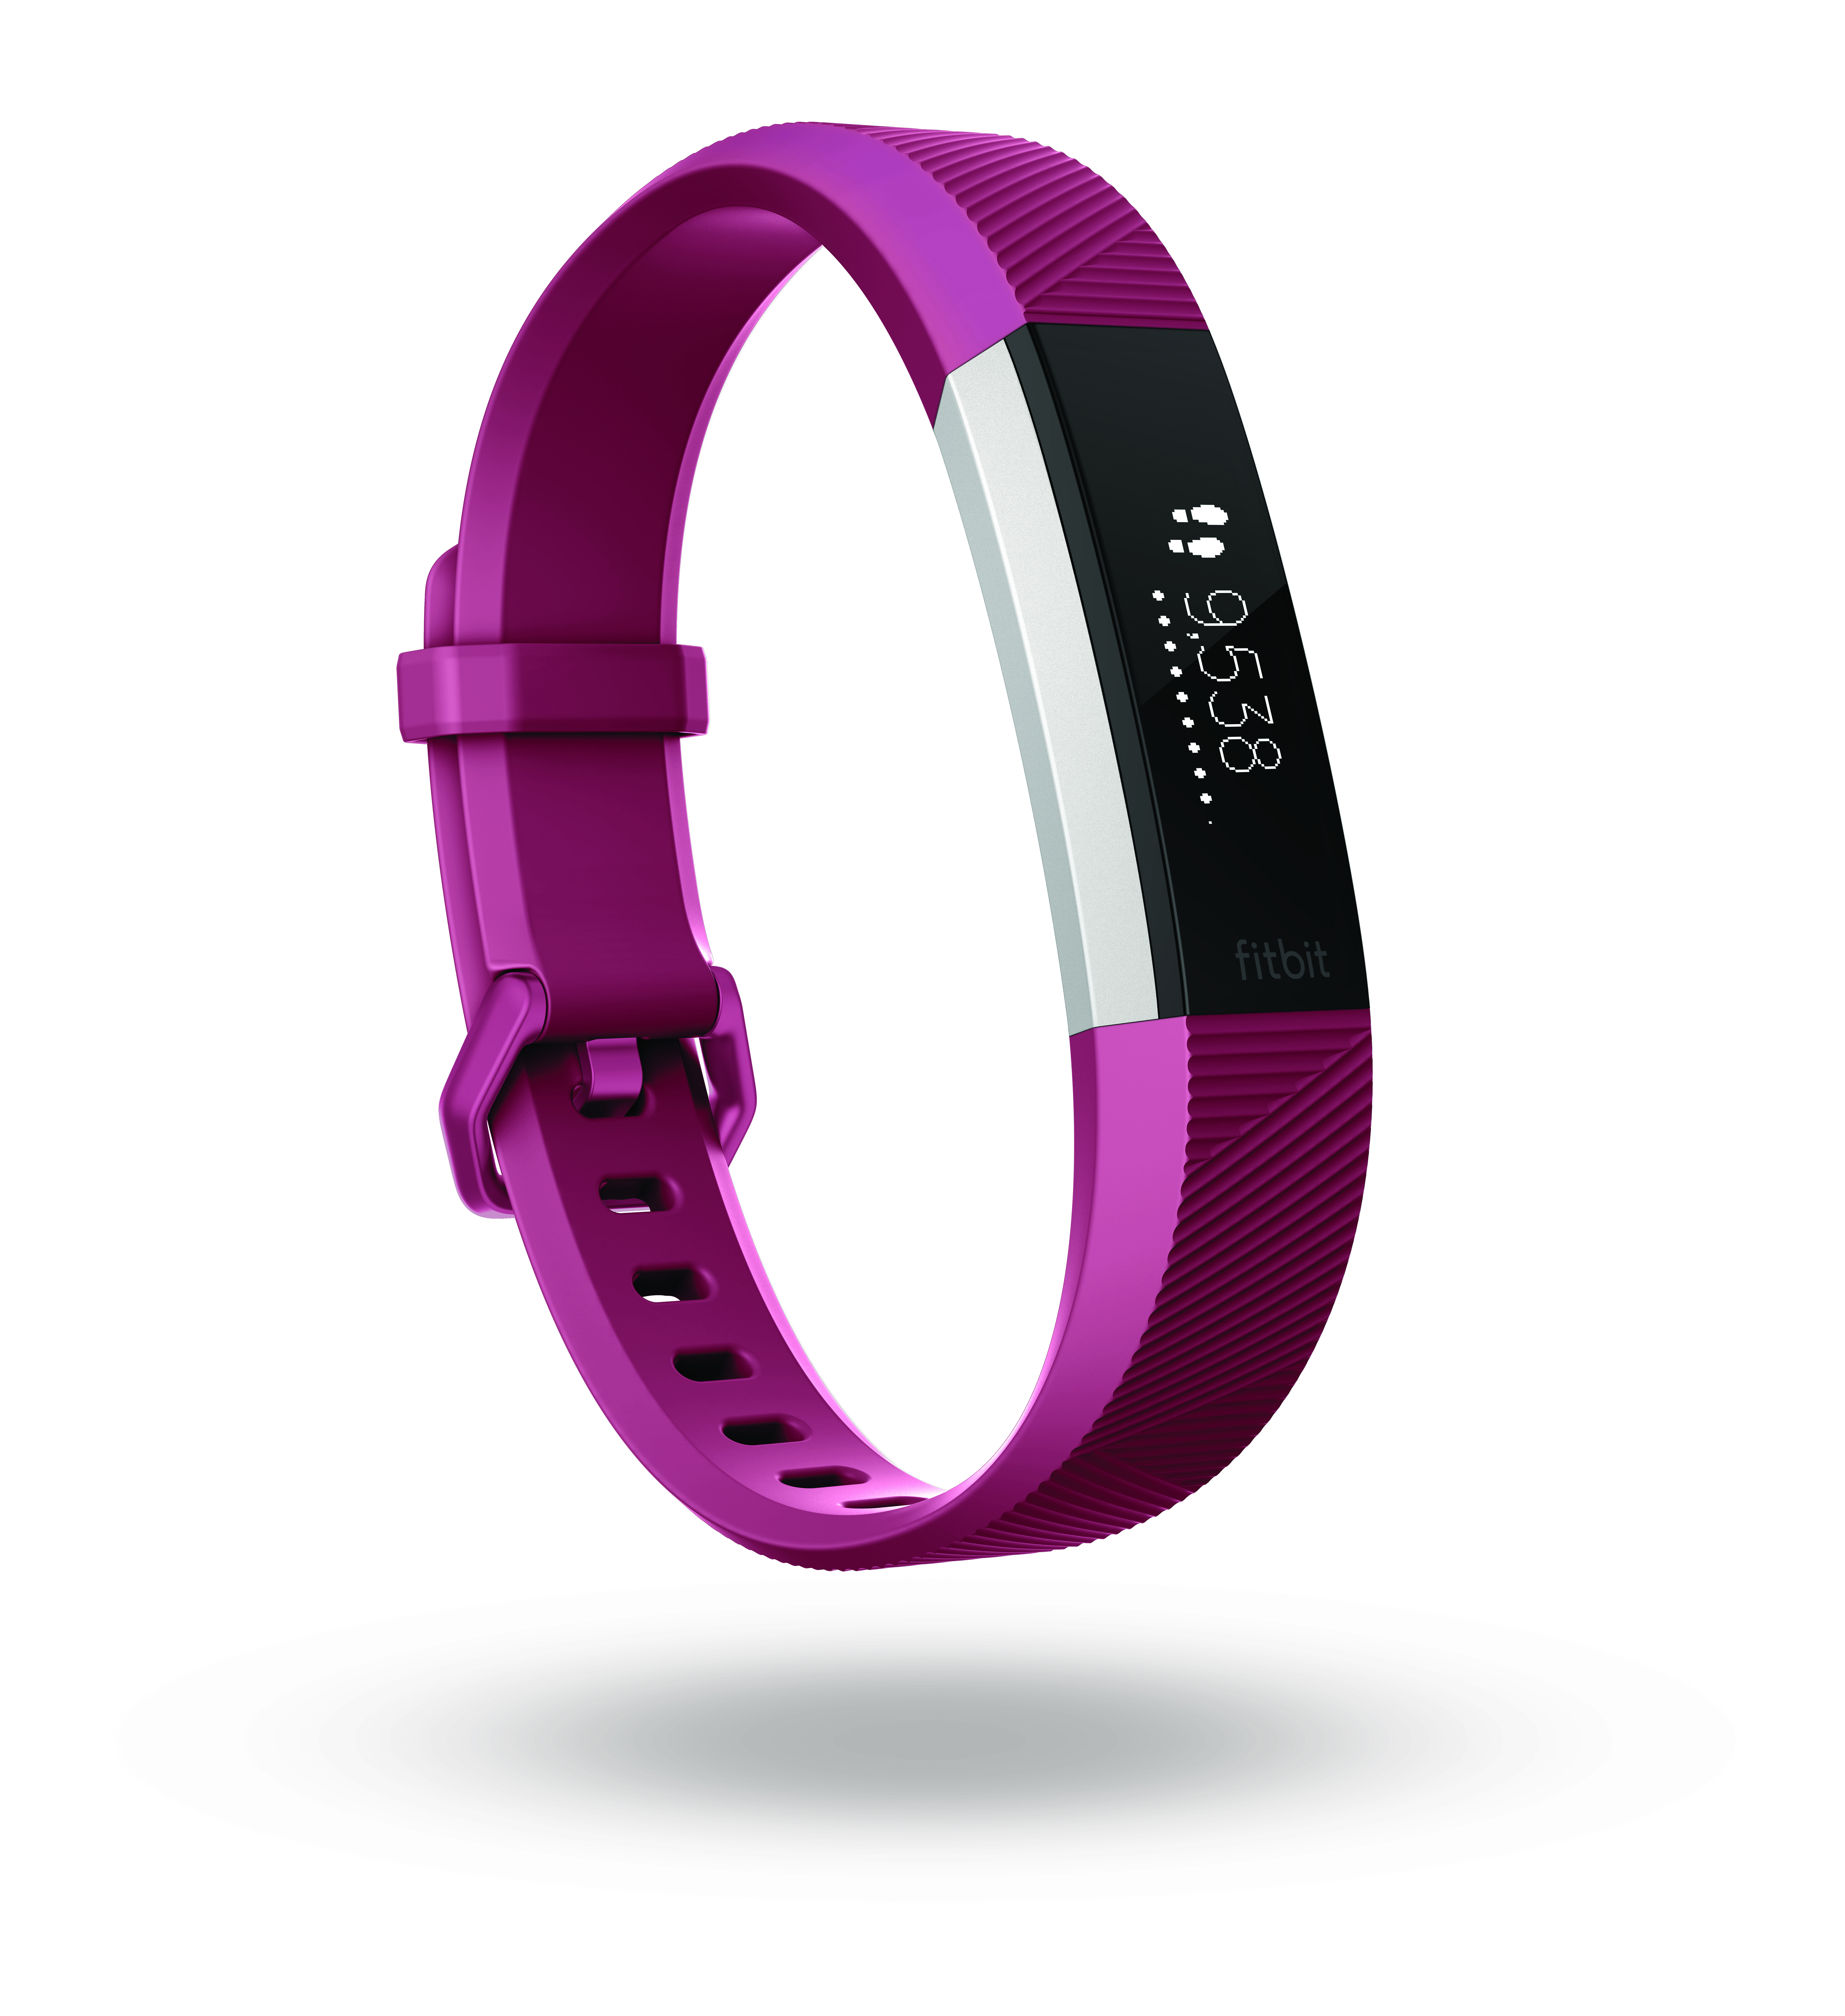 Activity tracker Fitbit FITBITALTAHRLA-PRP alta HR paars LAR